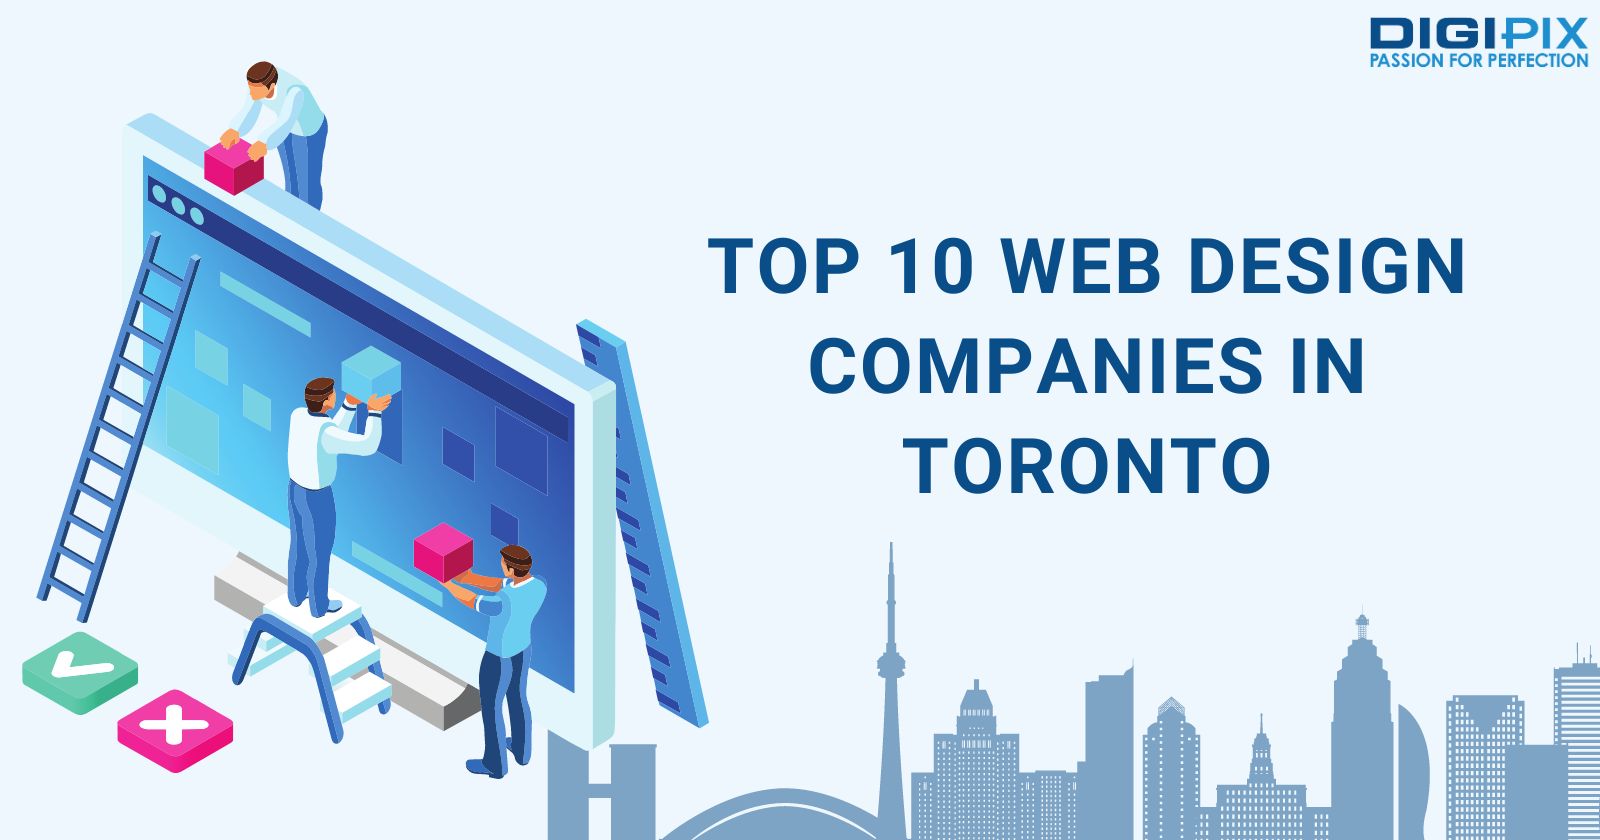 Web Design companies in Toronto